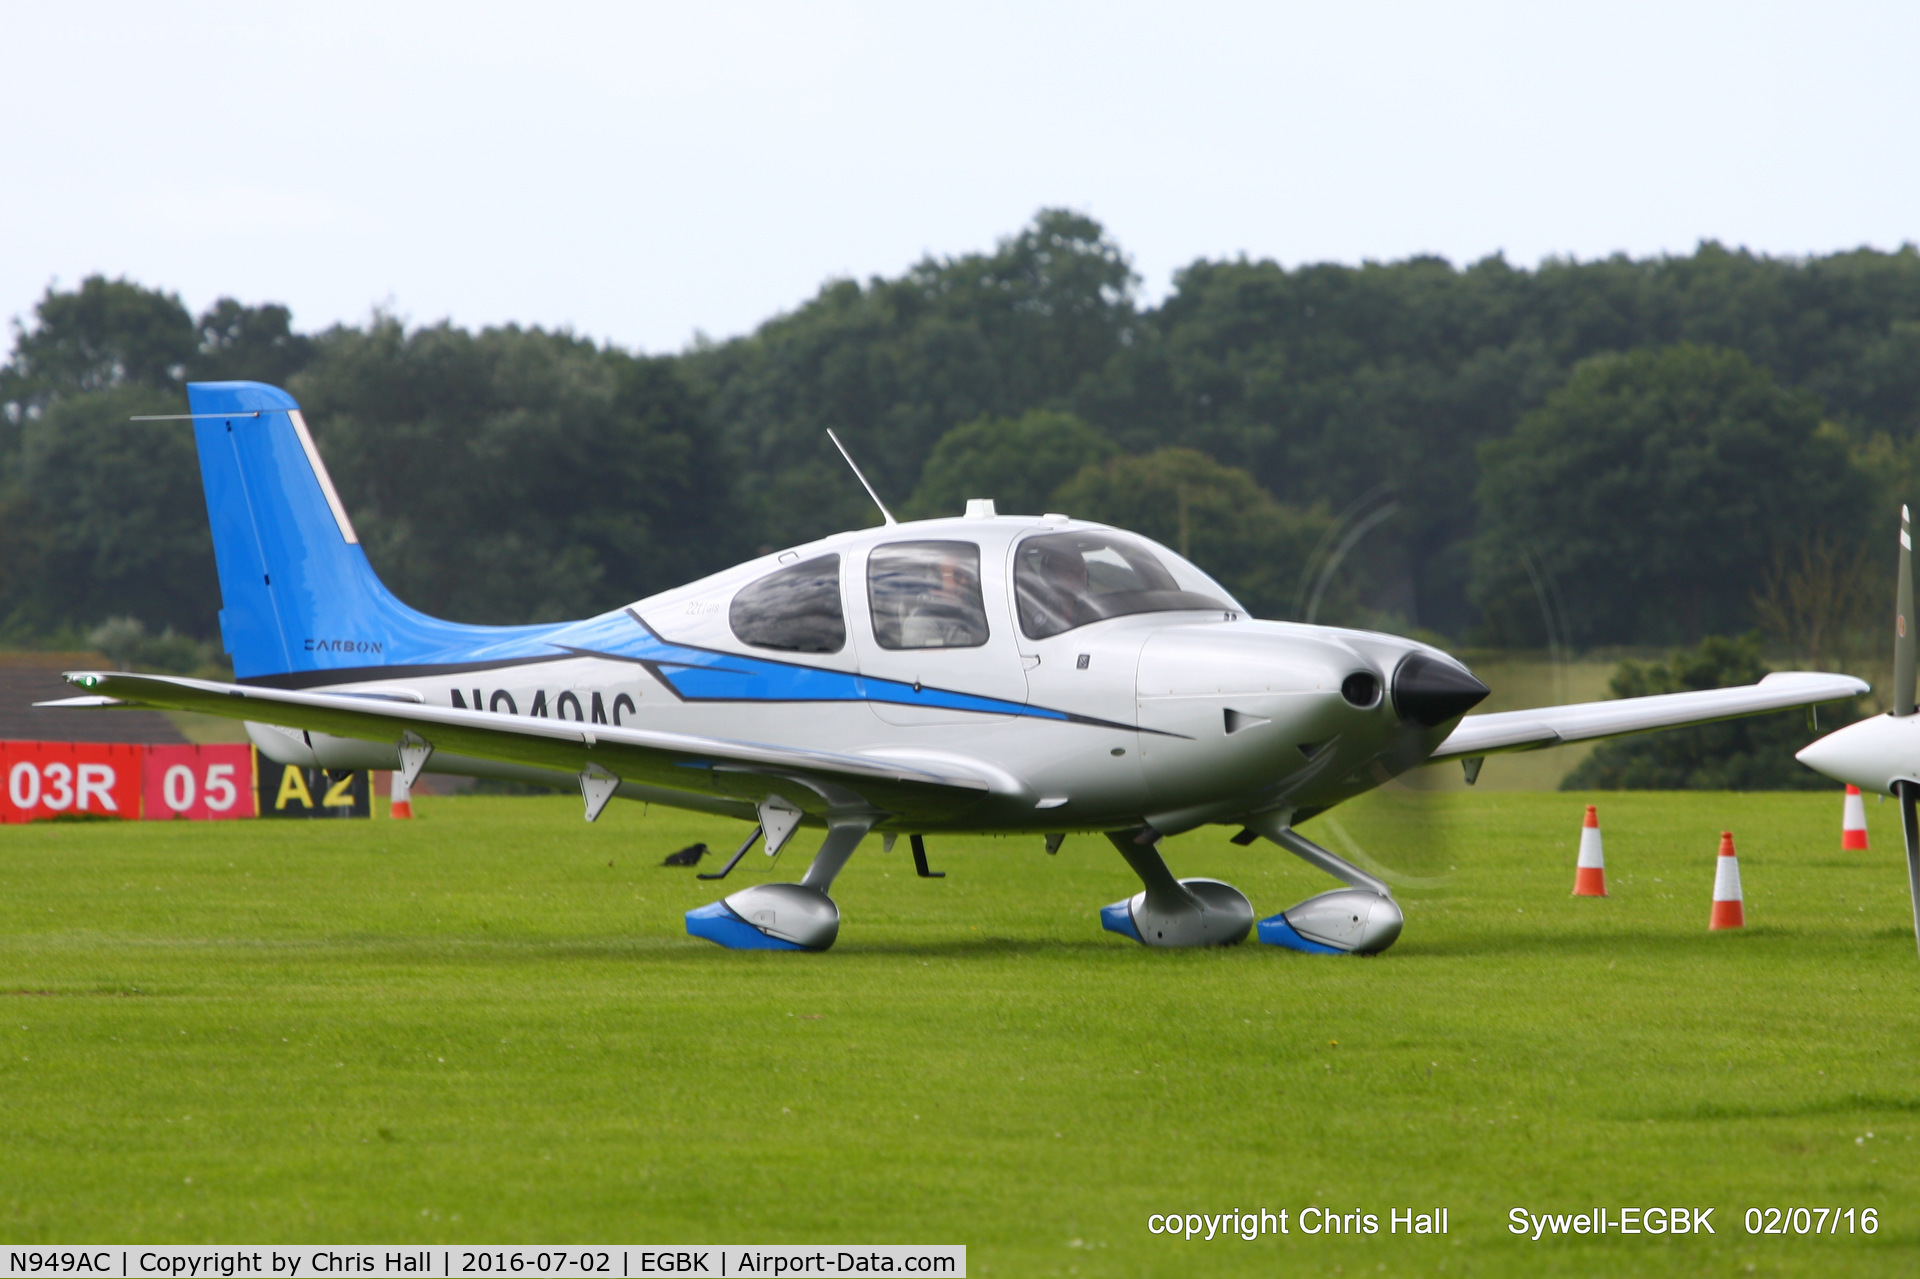 N949AC, 2014 Cirrus SR22T C/N 0833, at Aeroexpo 2016